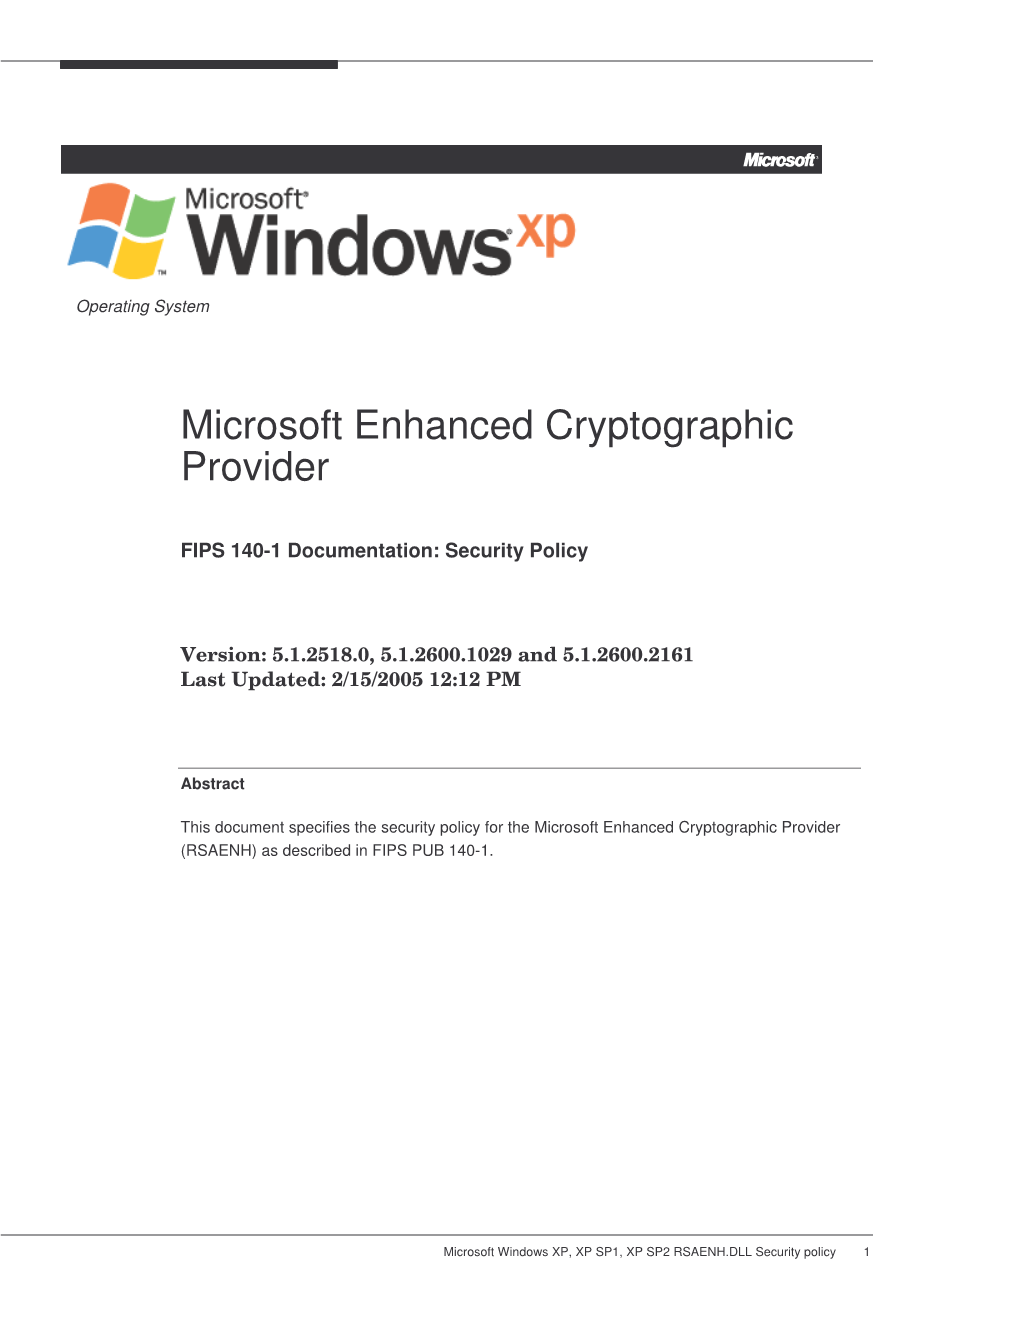 Microsoft Enhanced Cryptographic Provider